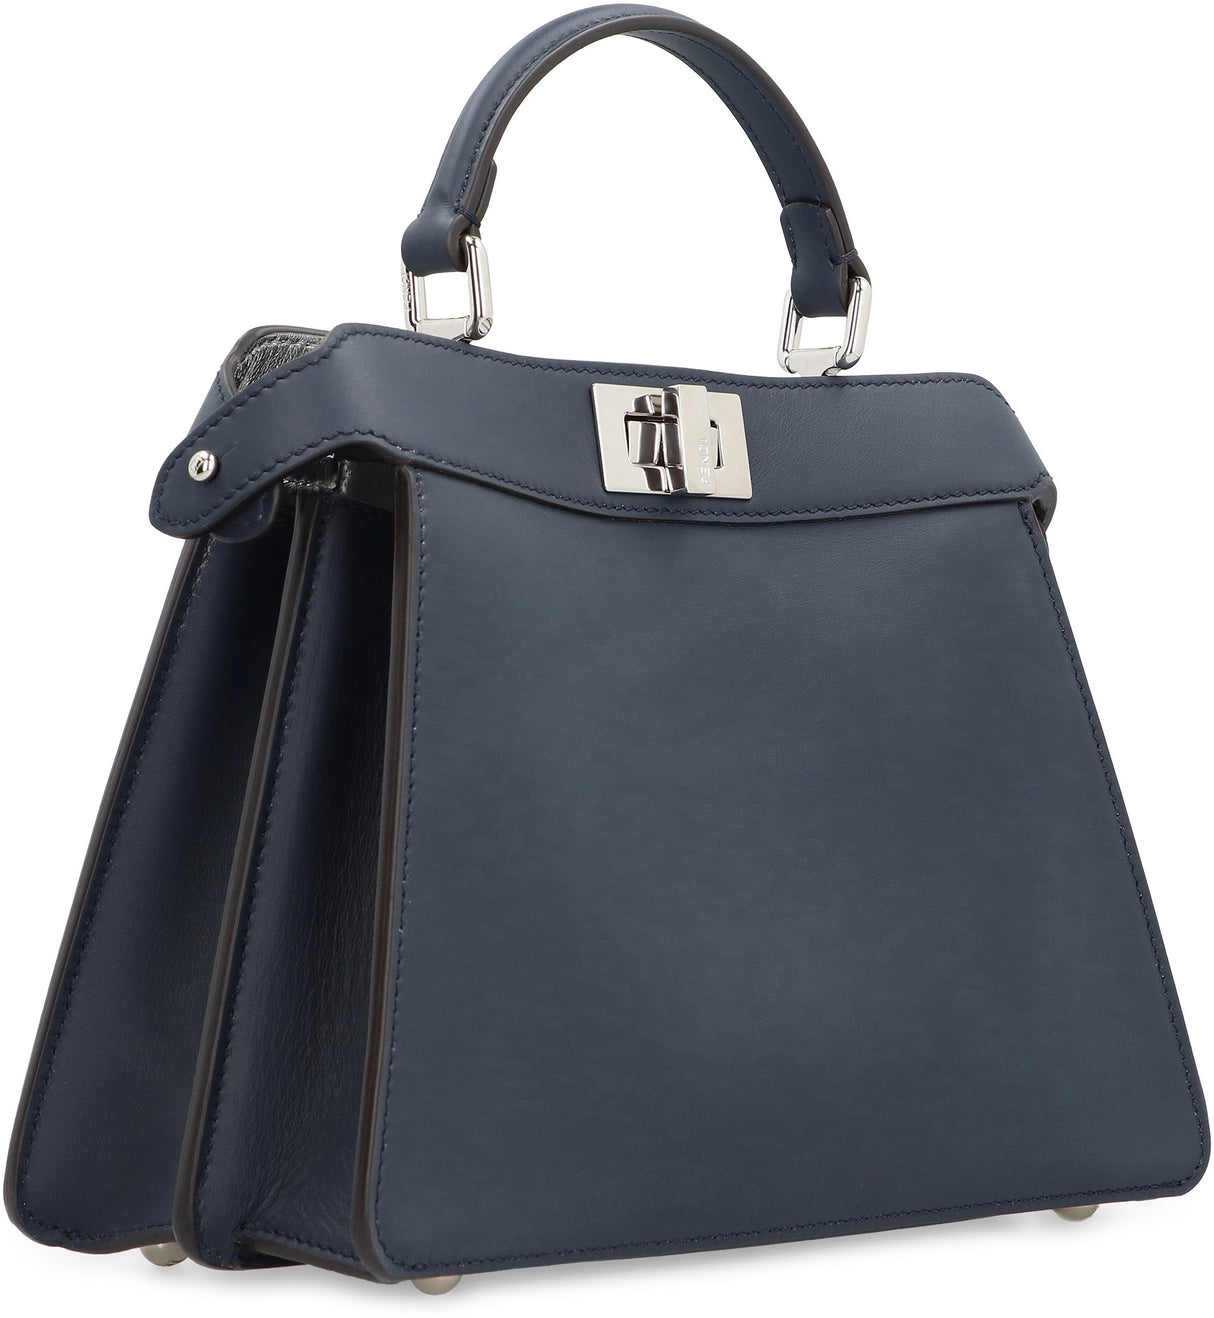 Blue Leather Top Handle Handbag by FENDI for Women